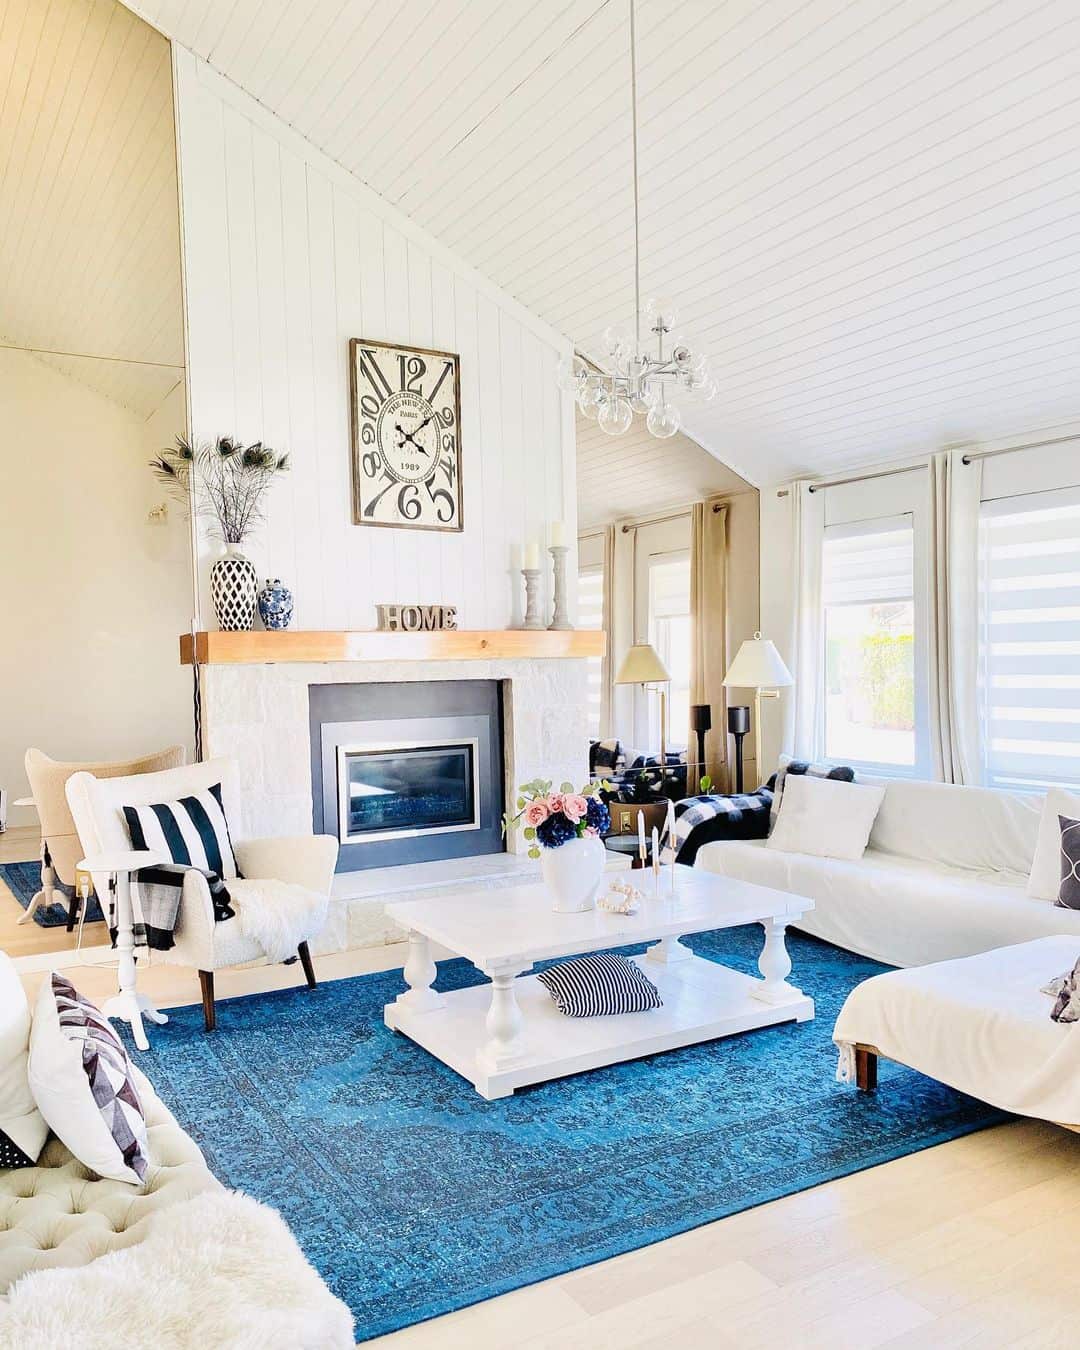 Vibrant Blue Rug Illuminates a White Living Room